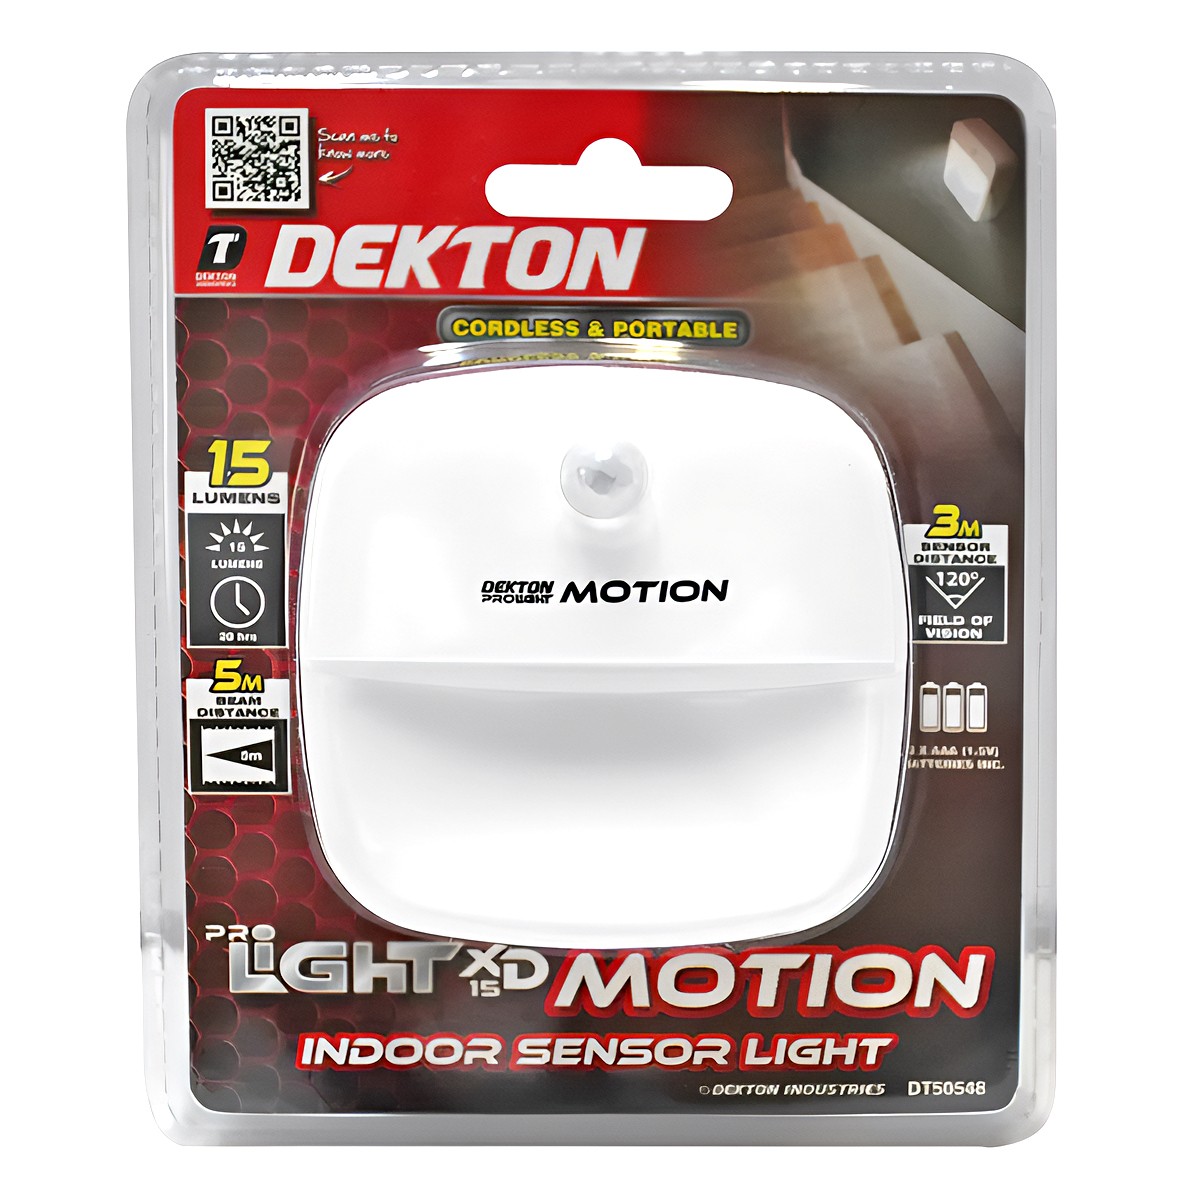 DEKTON PRO LIGHT XD15 MOTION INDOOR